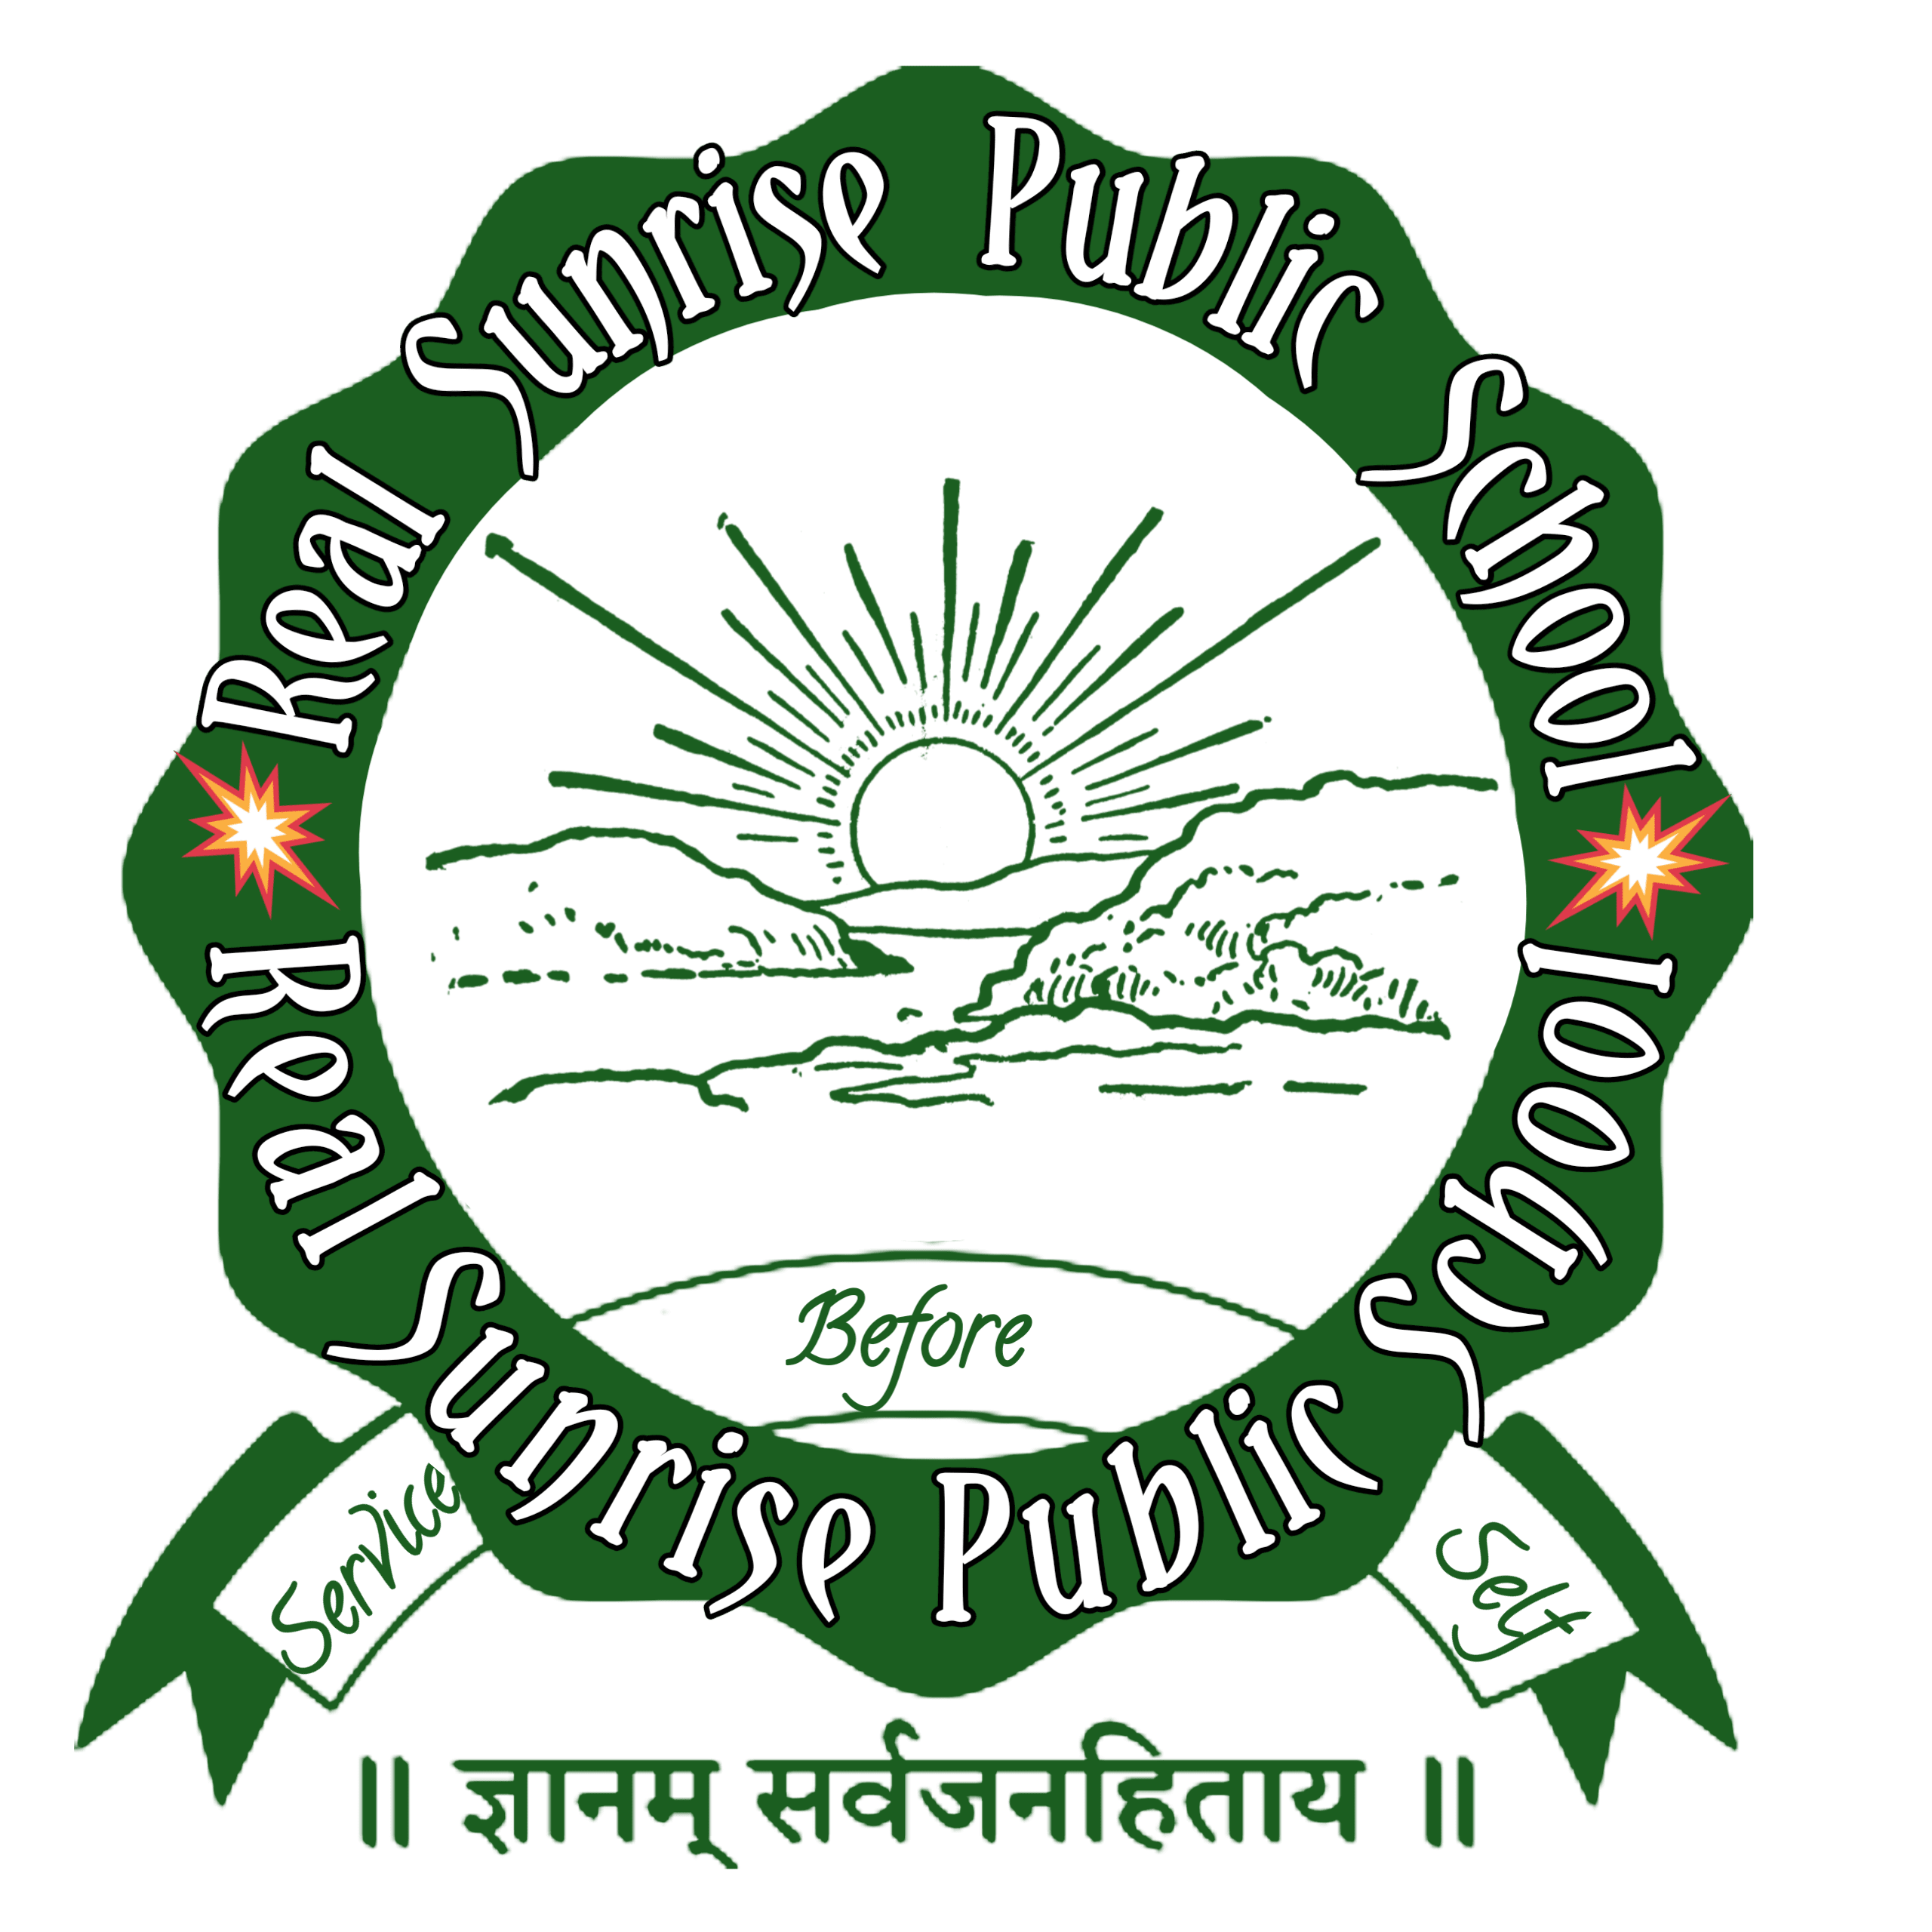 Real Sunrise Public School